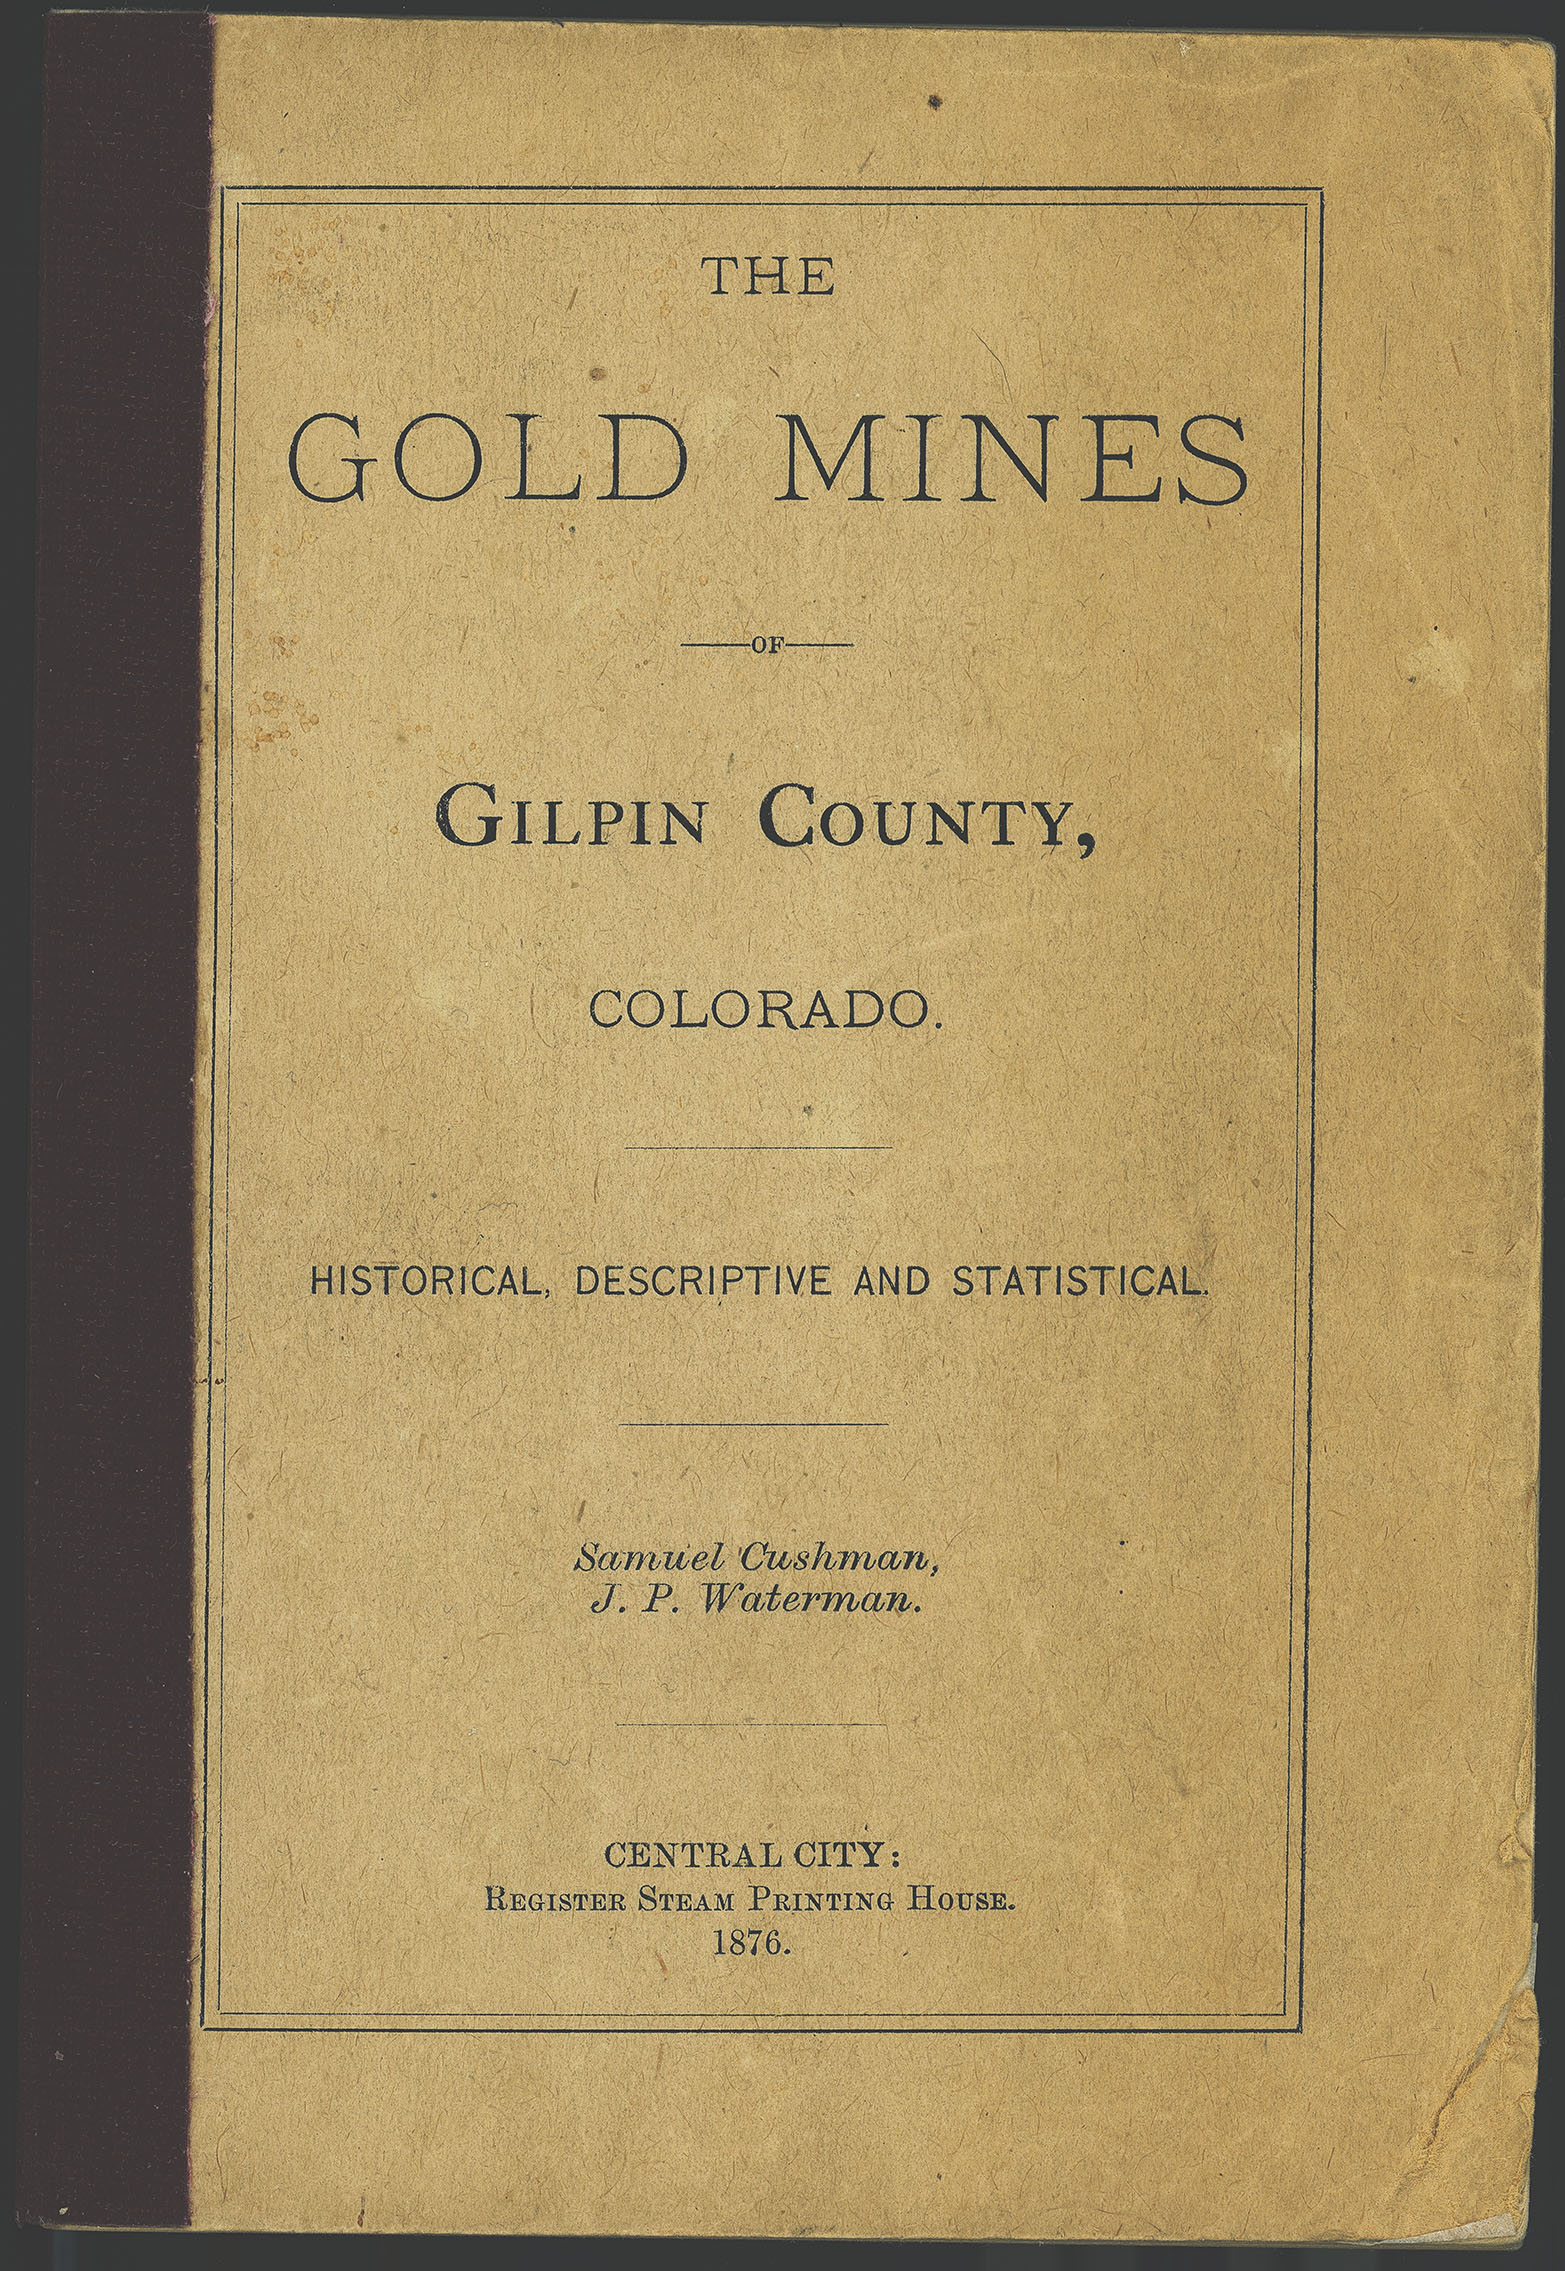 GOLD MINES OF GILPIN COUNTY COLORADO TERRITORY 1876 Cushman & Waterman original book